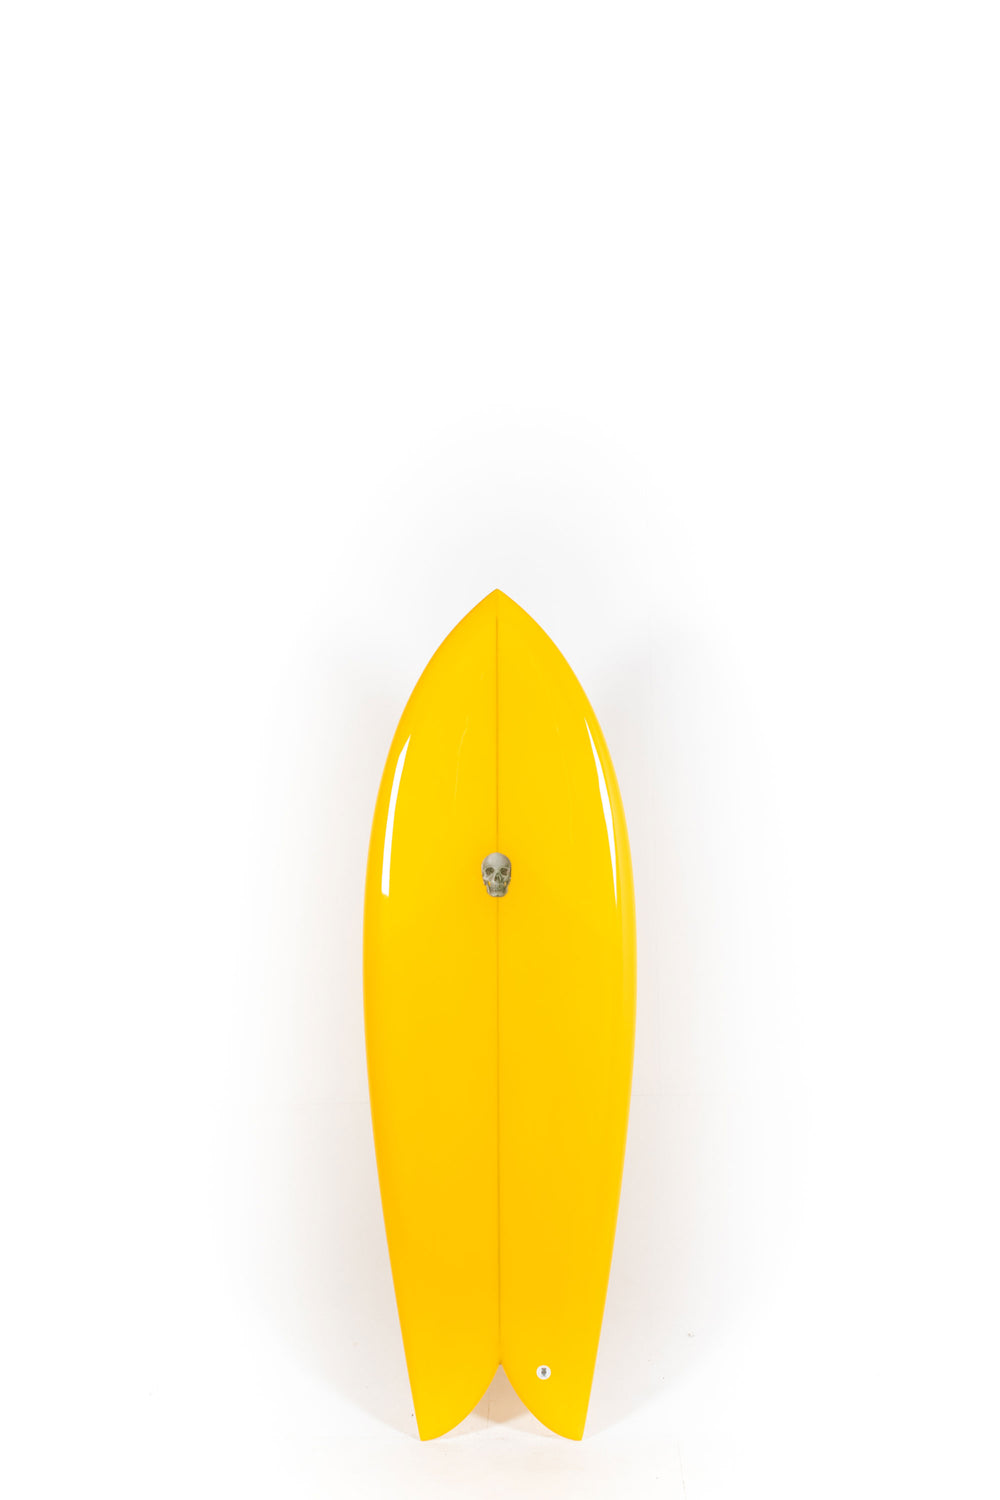 Pukas Surf Shop - Christenson Surfboards - CHRIS FISH - 5'4